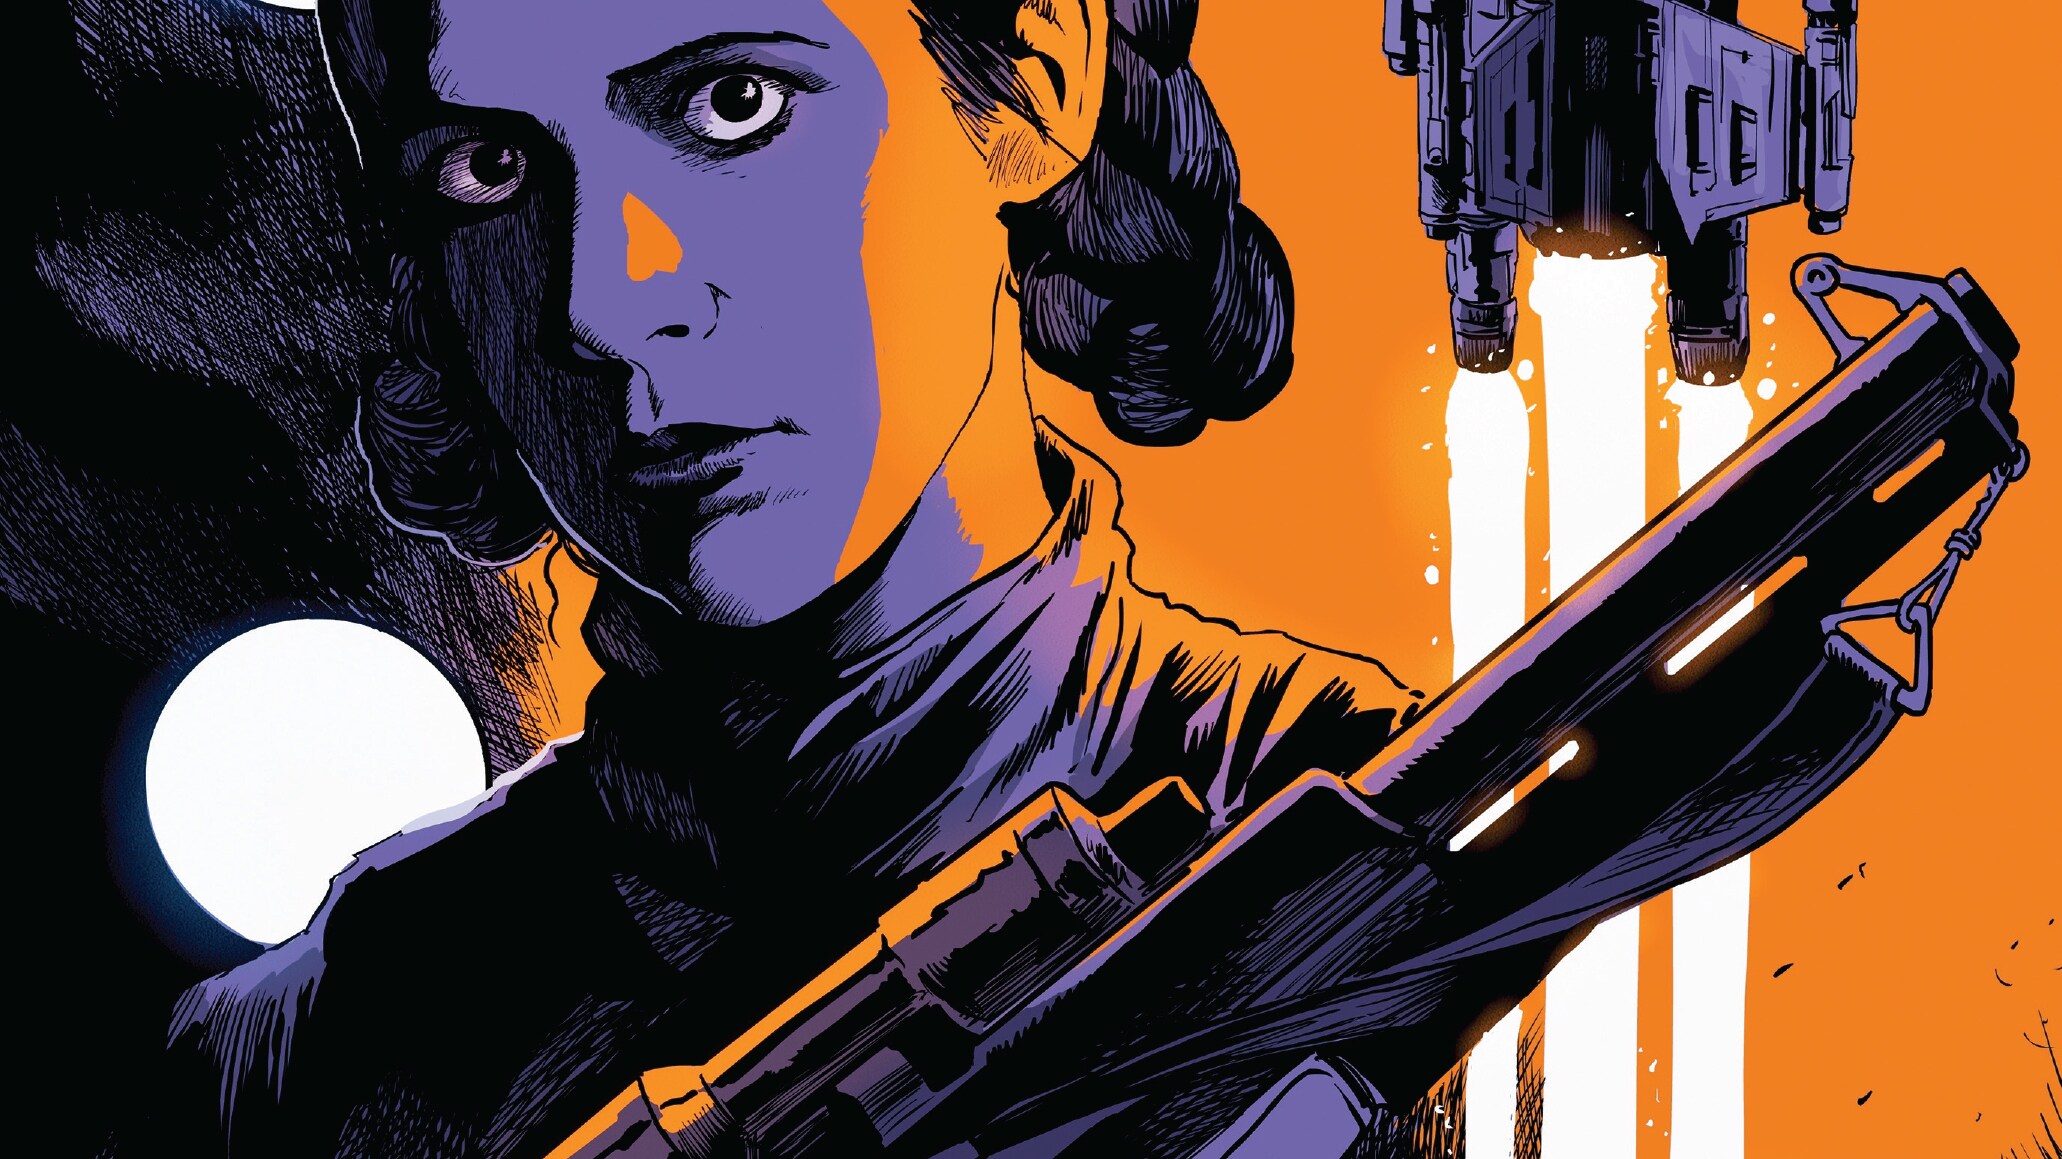 Leia holds a blaster rifle on the cover of Princess Leia #3.